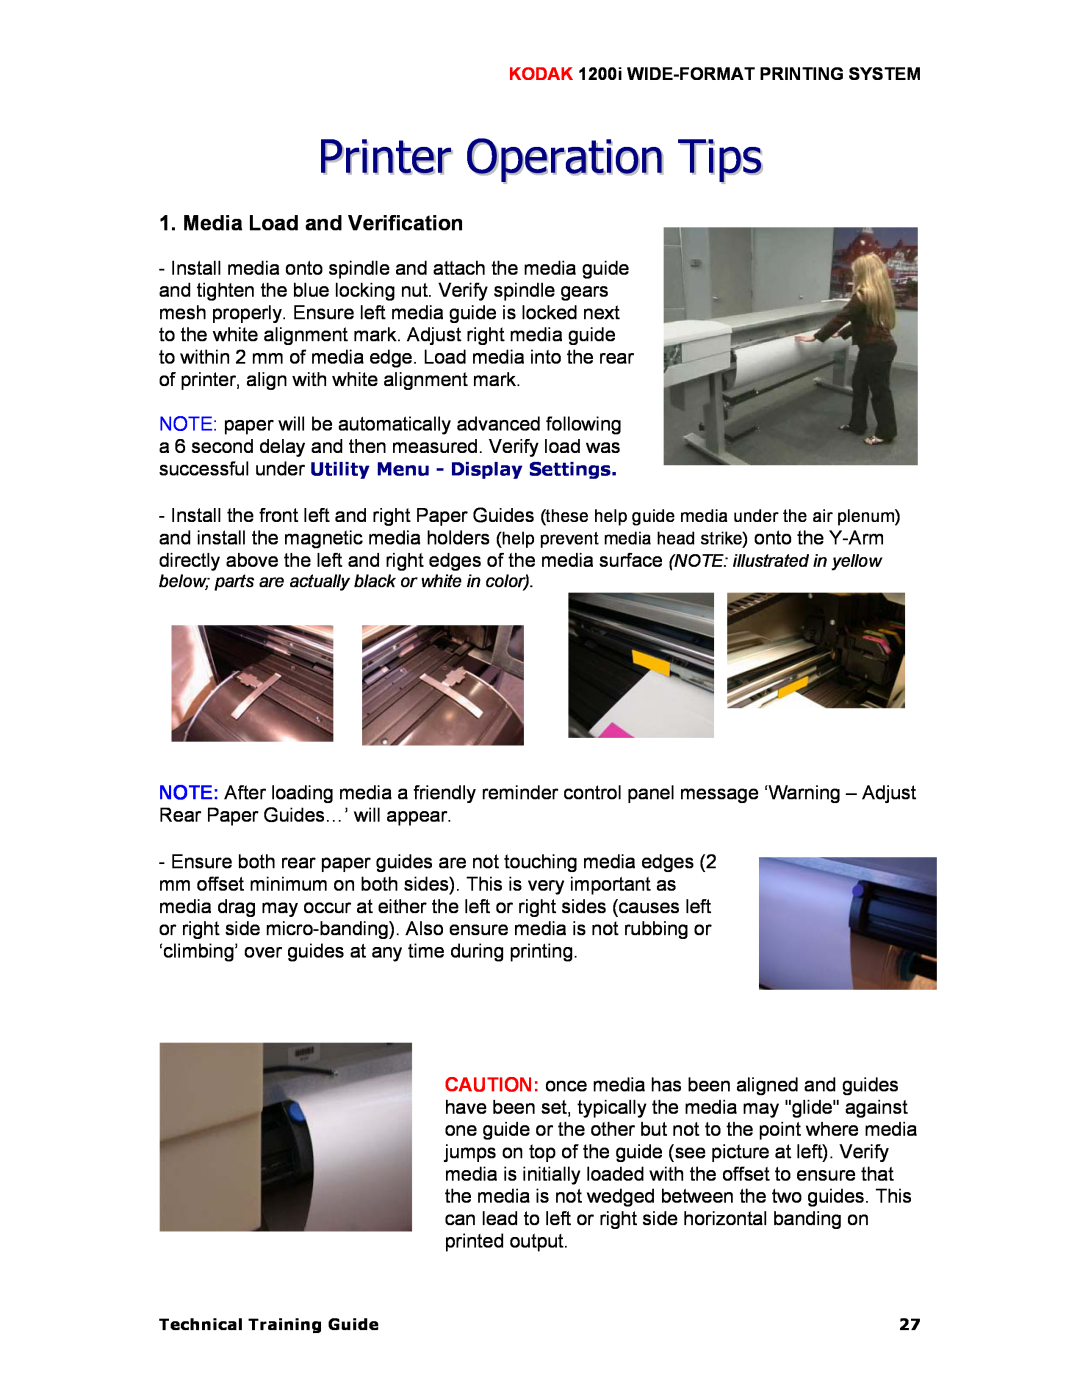 Kodak 1200I manual Printer Operation Tips, Media Load and Verification 